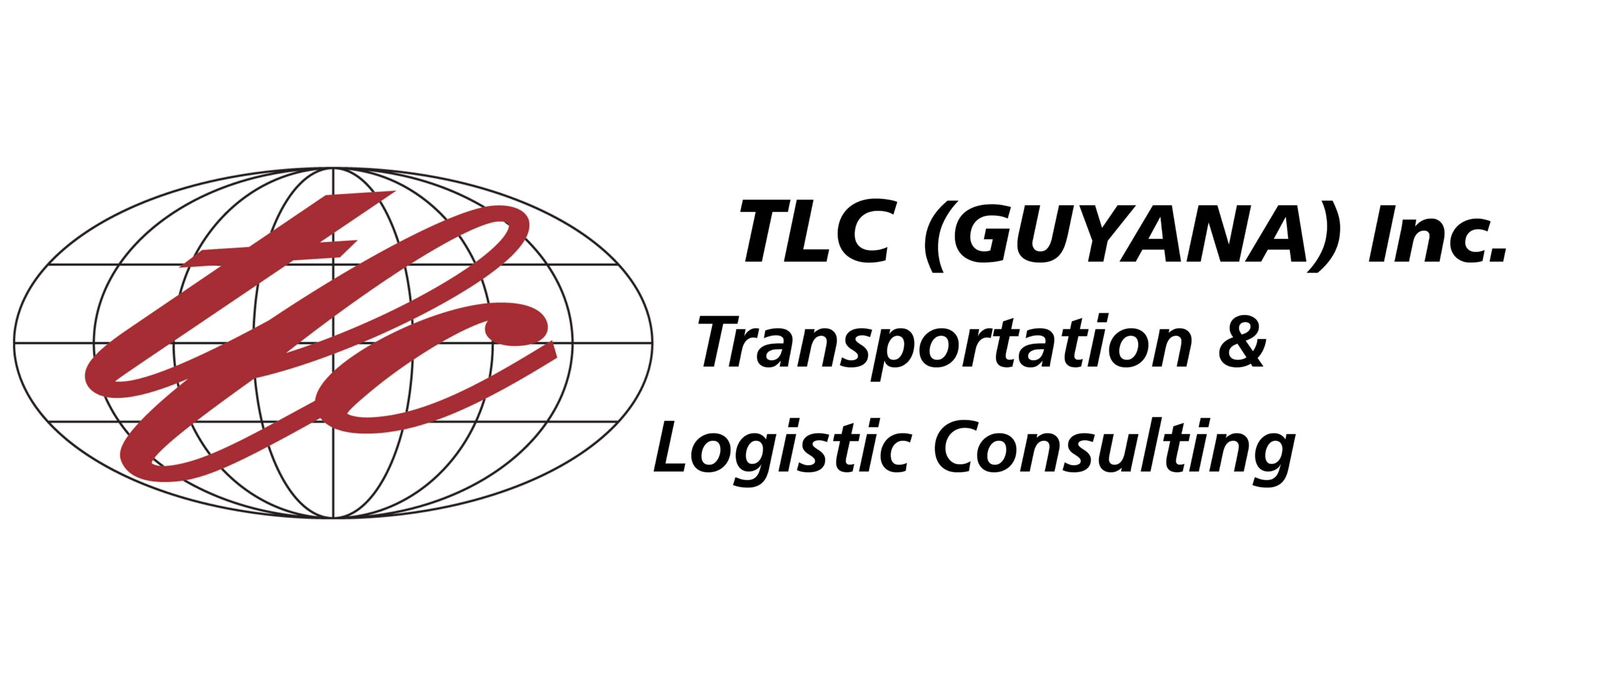 Vacancy: TLC (GUYANA) INC.